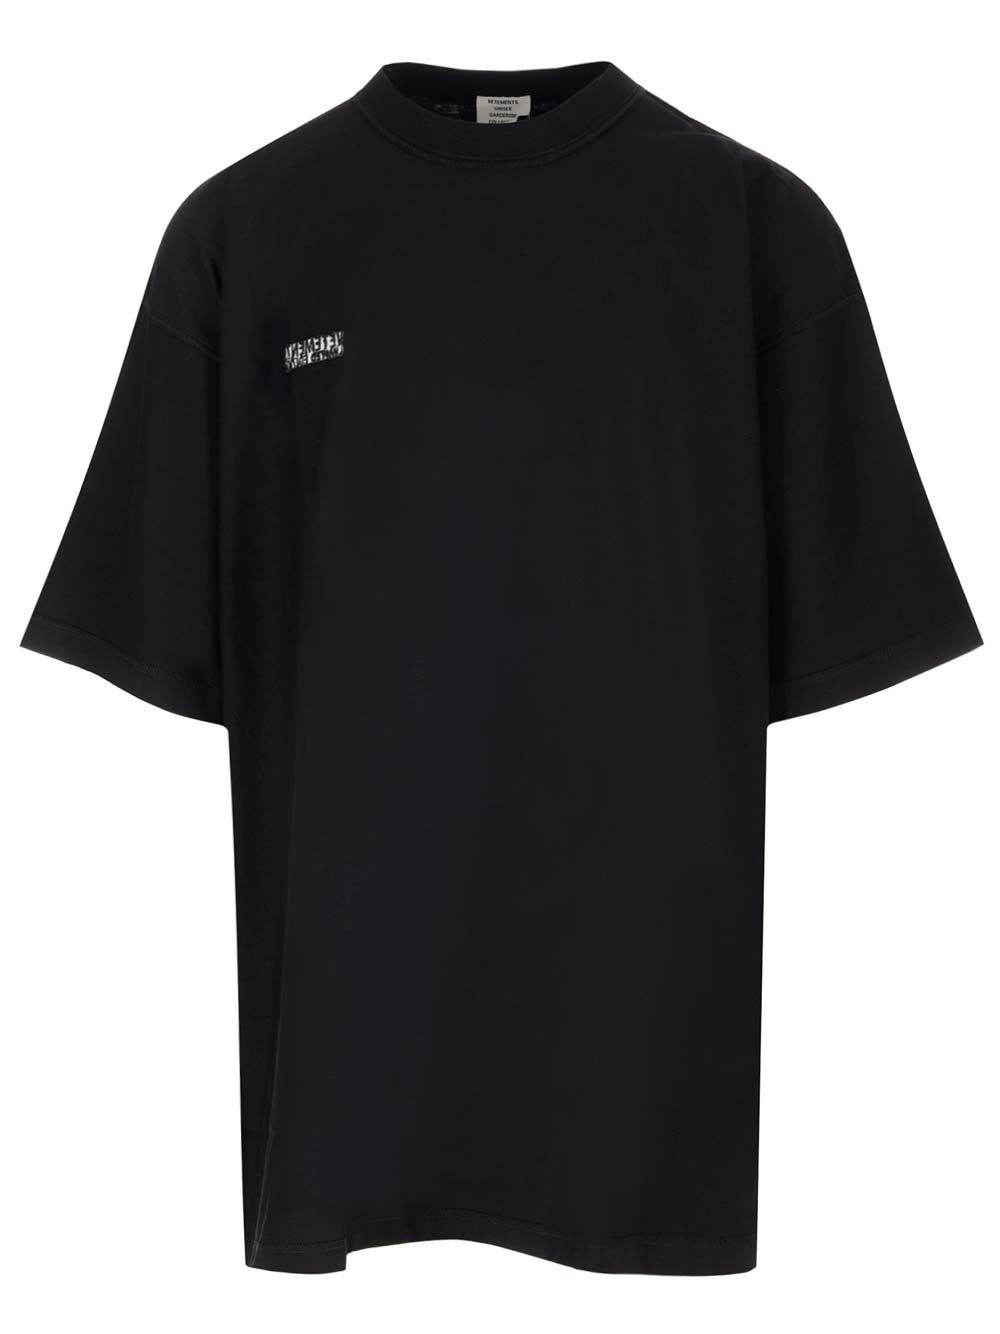 Buy VETEMENTS men black t-shirt inside out for $1,545 online on